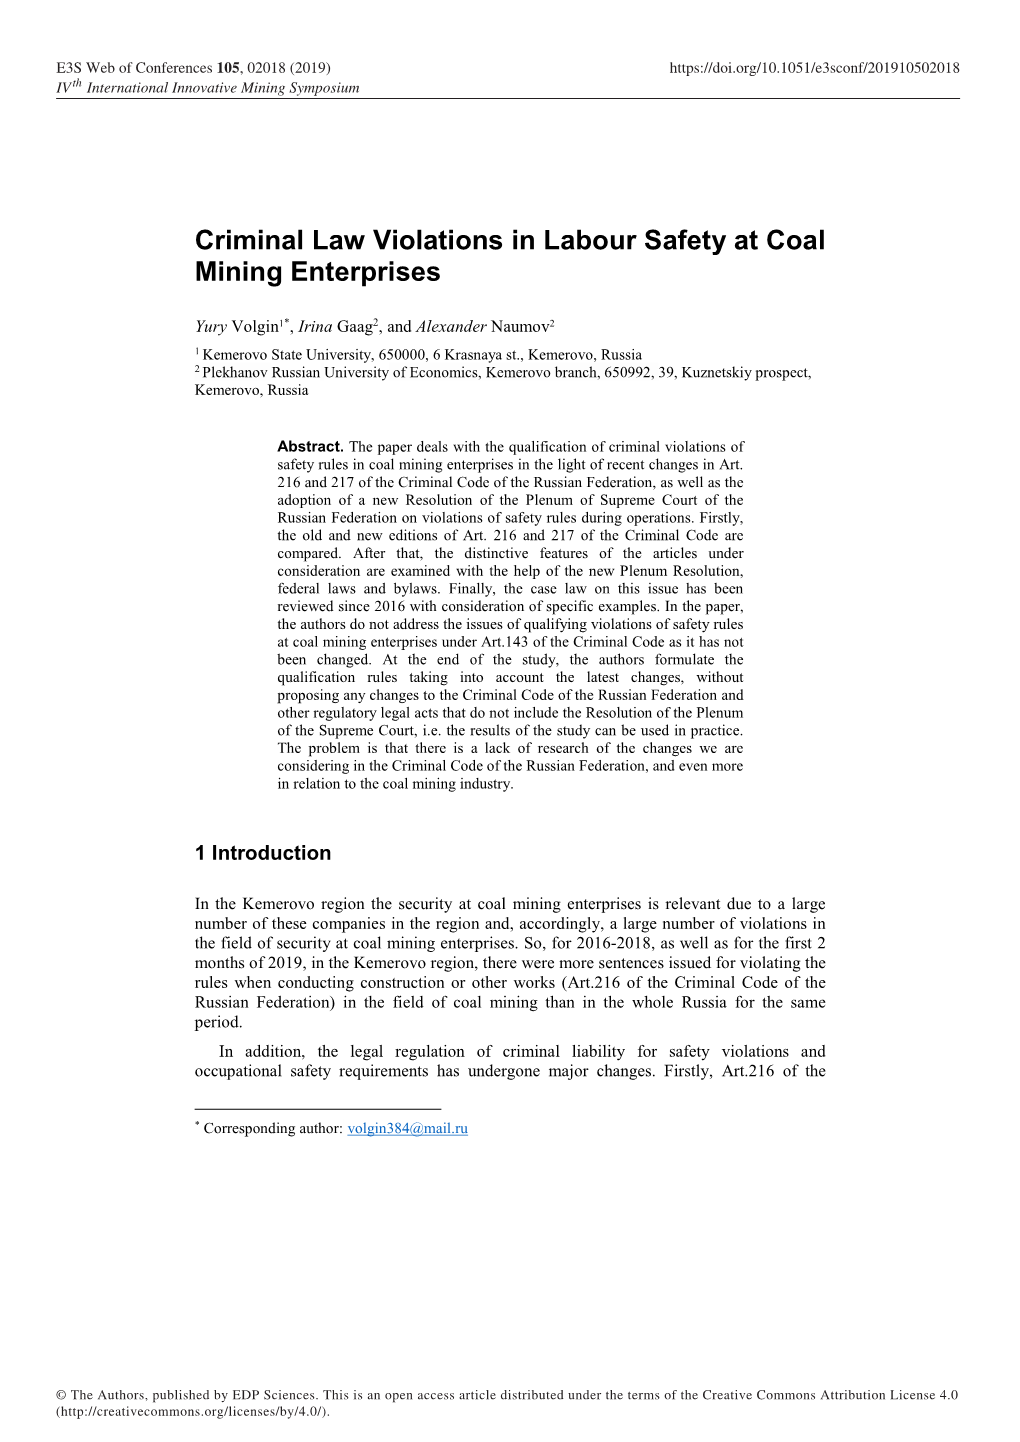 Criminal Law Violations in Labour Safety at Coal Mining Enterprises